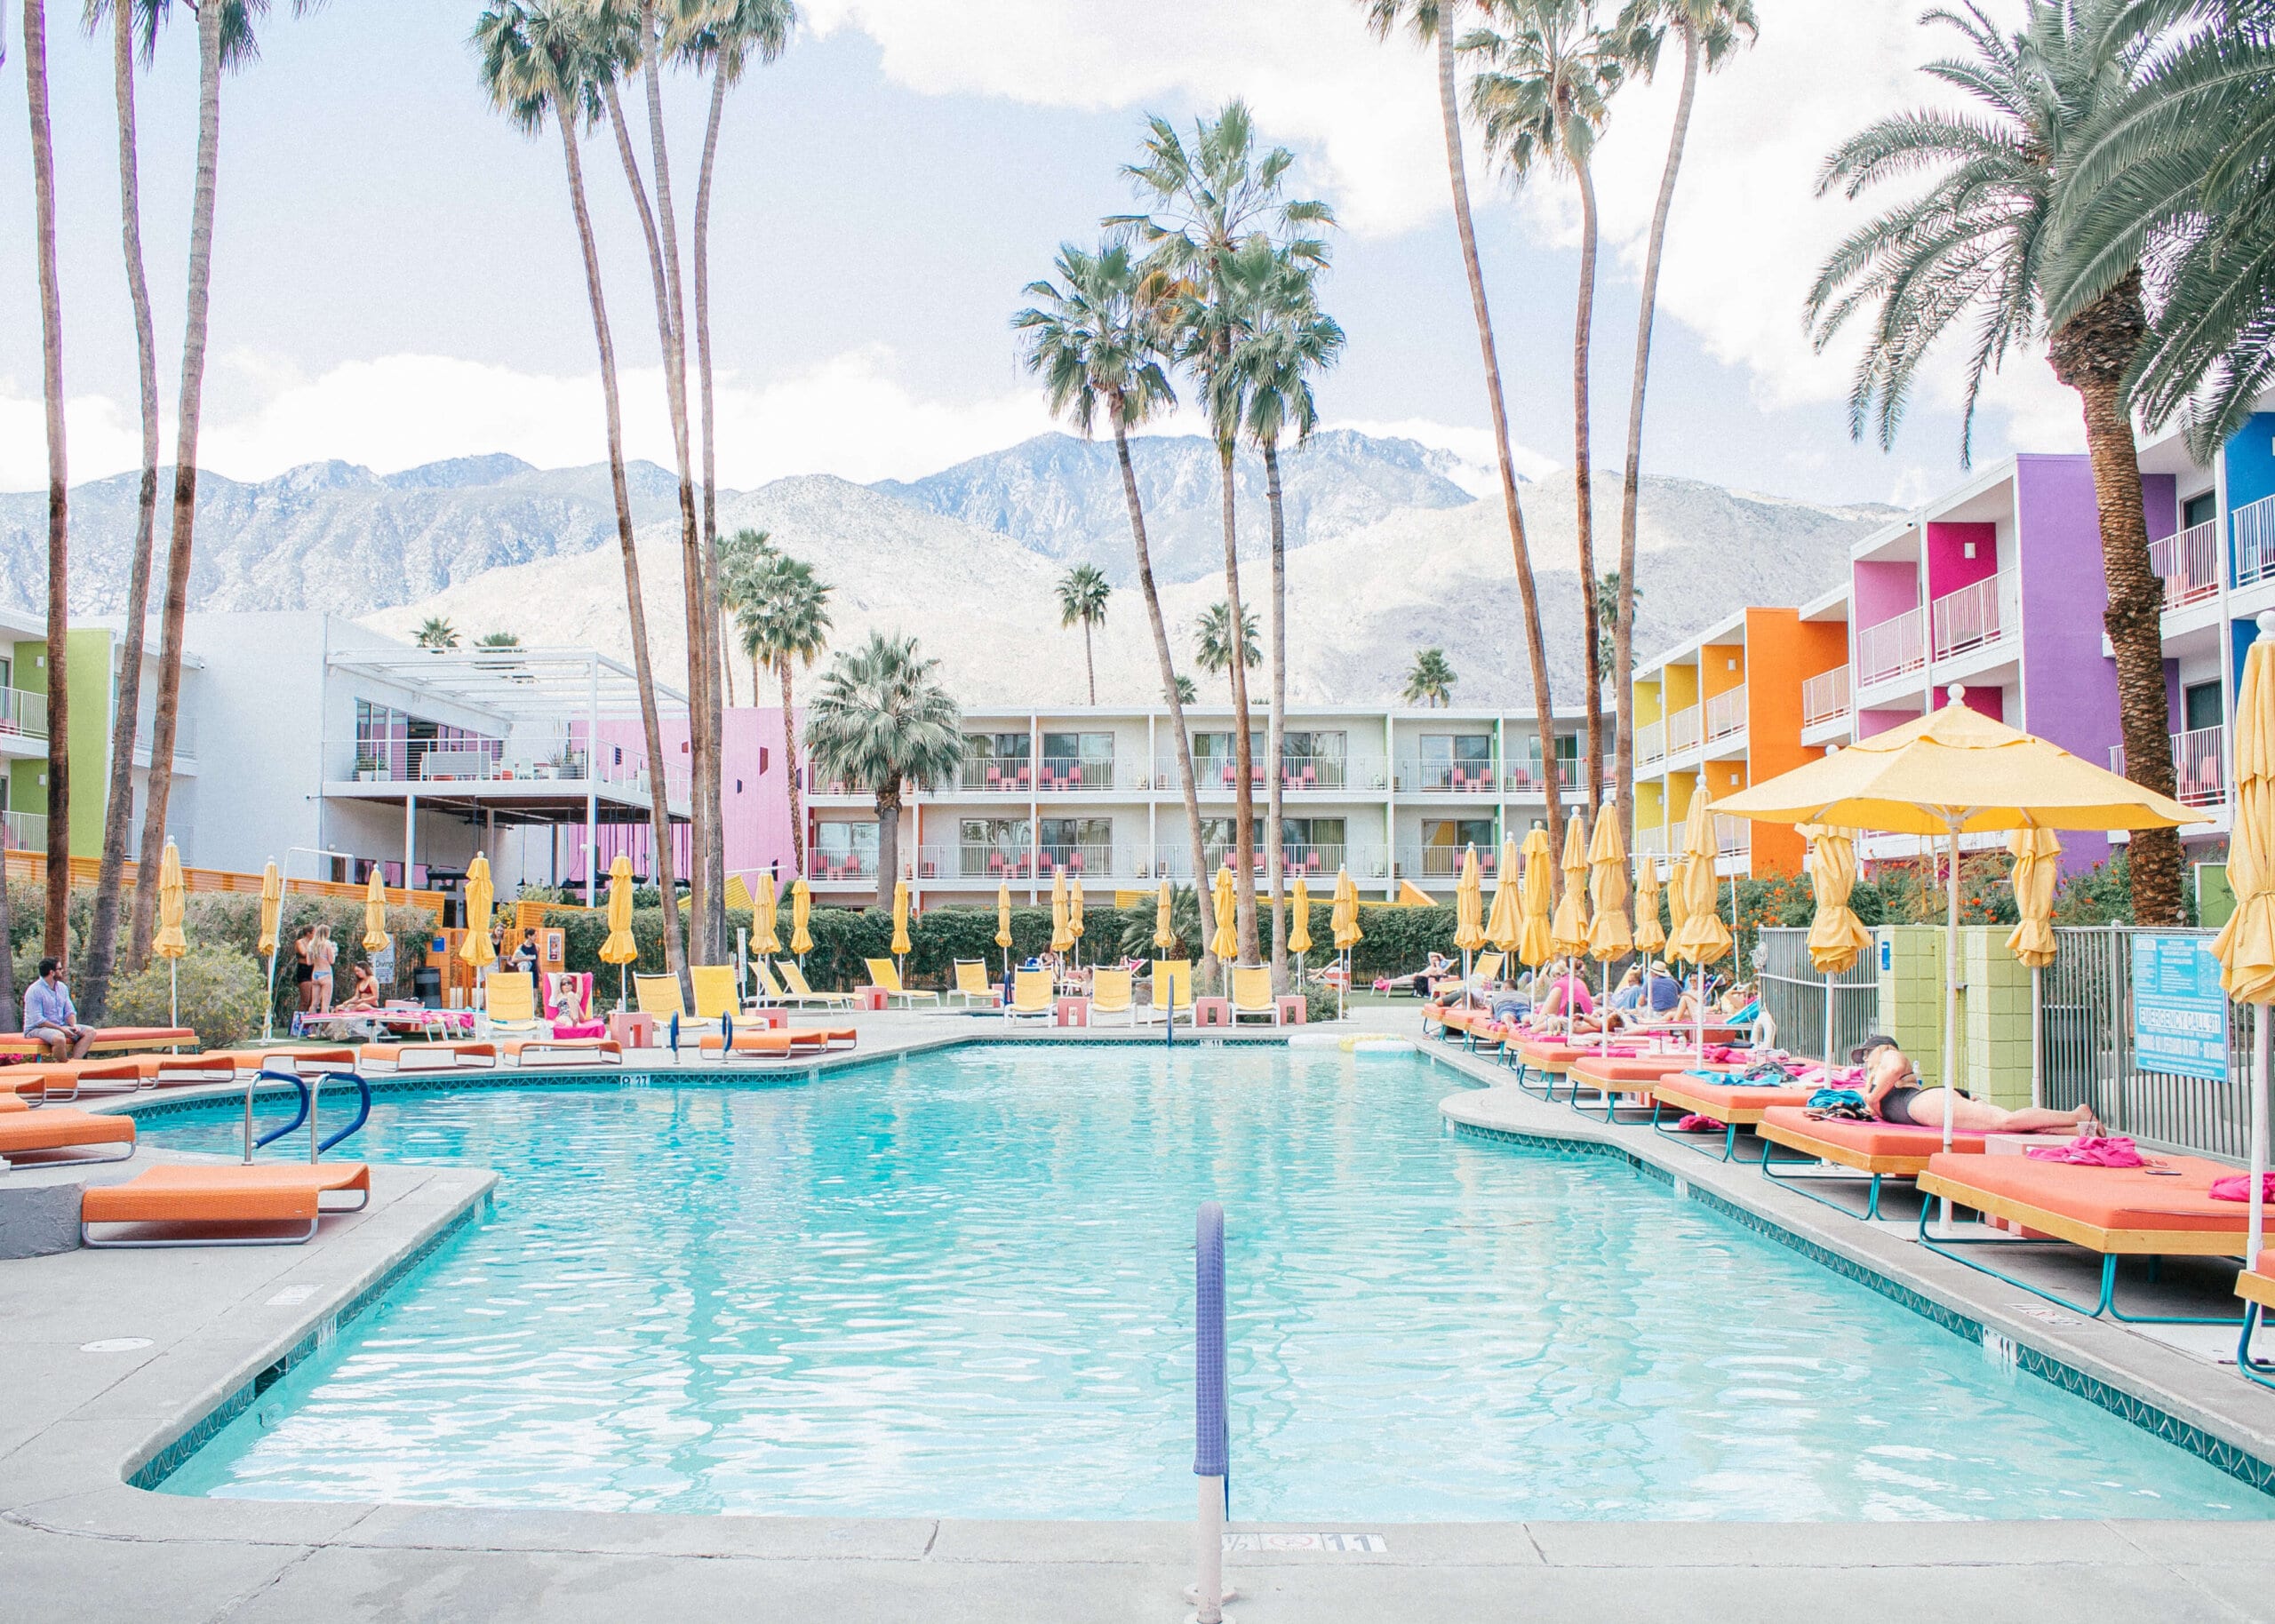 The Saguaro rainbow colour hotel in Palm Springs, California